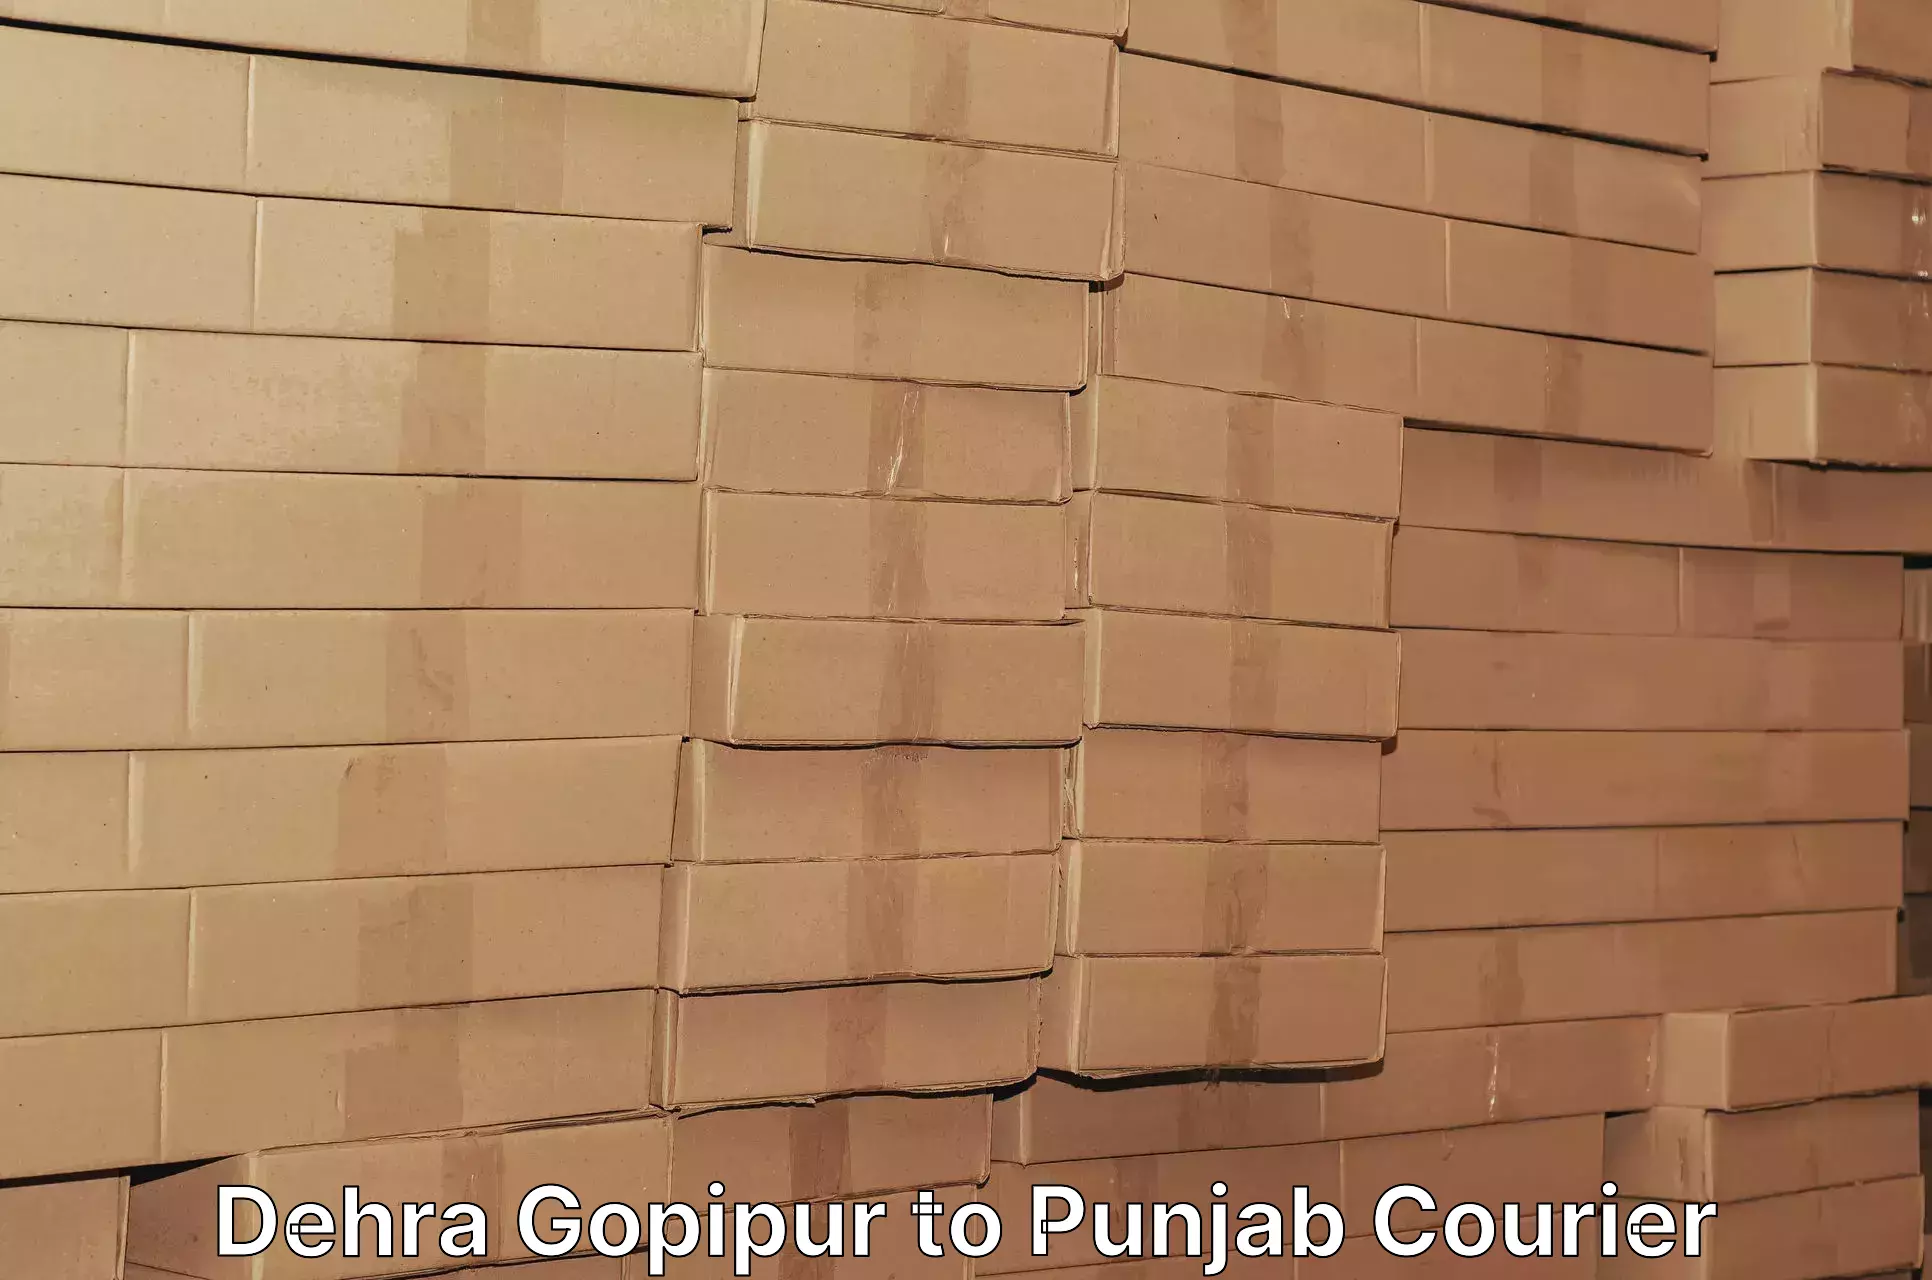 On-demand shipping options Dehra Gopipur to Punjab